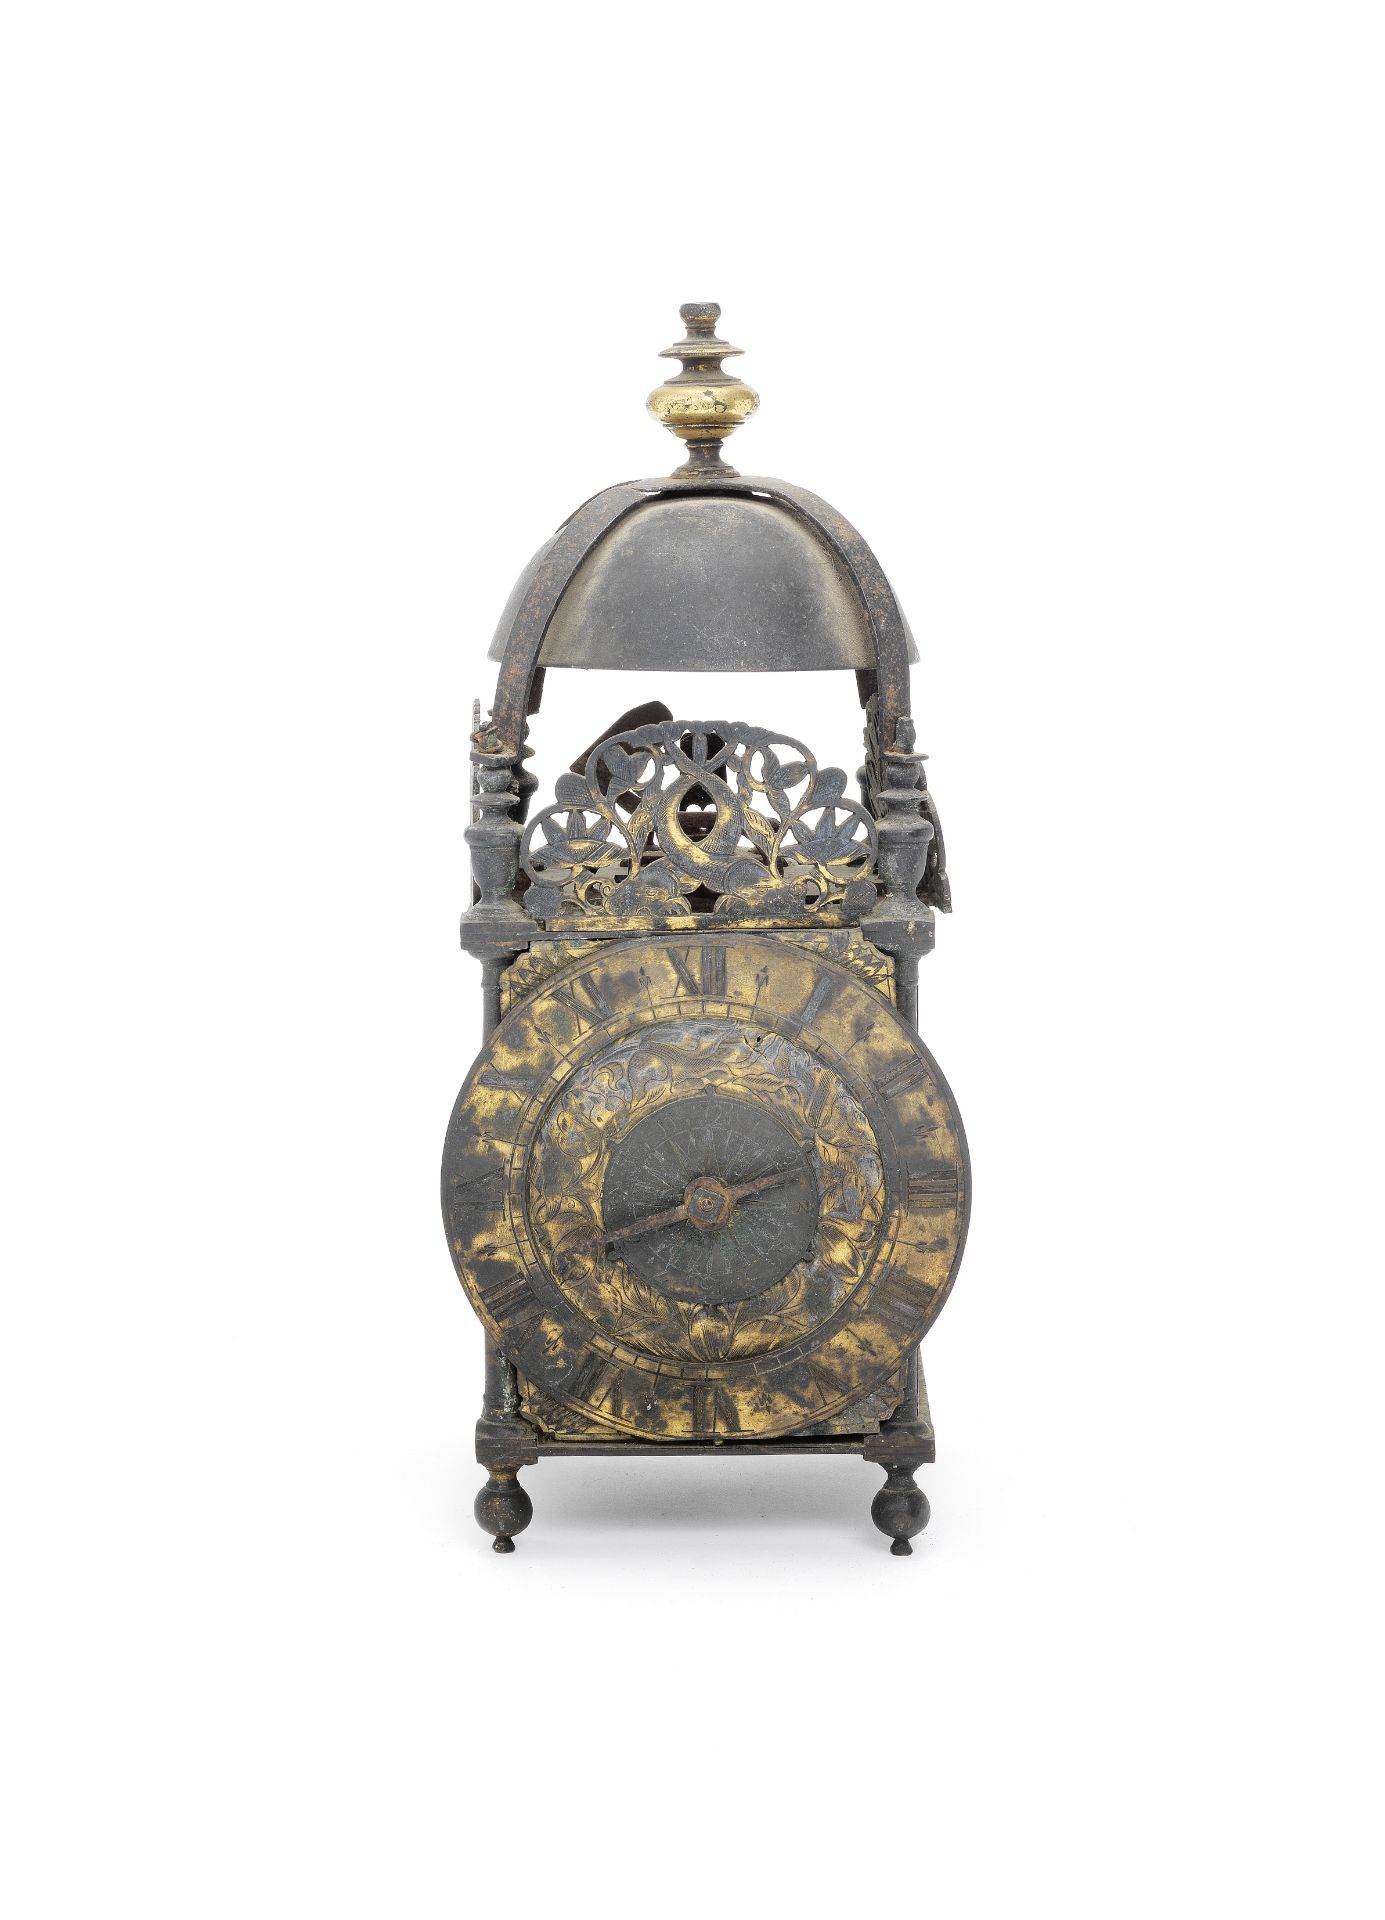 A mid 17th century lantern clock